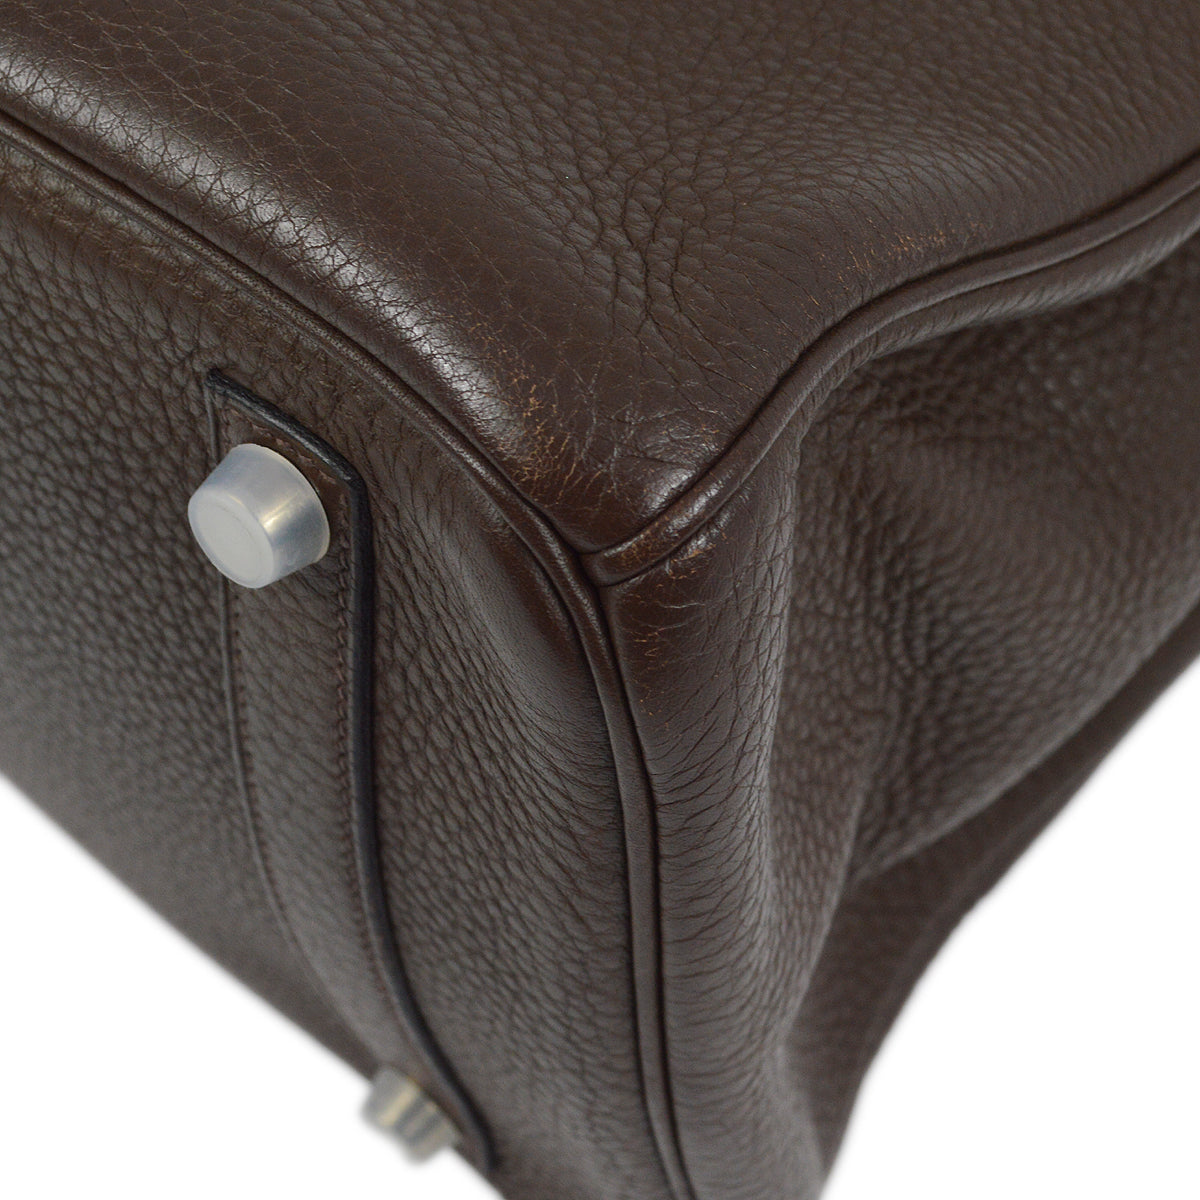 Hermes Brown Taurillon Clemence Birkin 35 Handbag